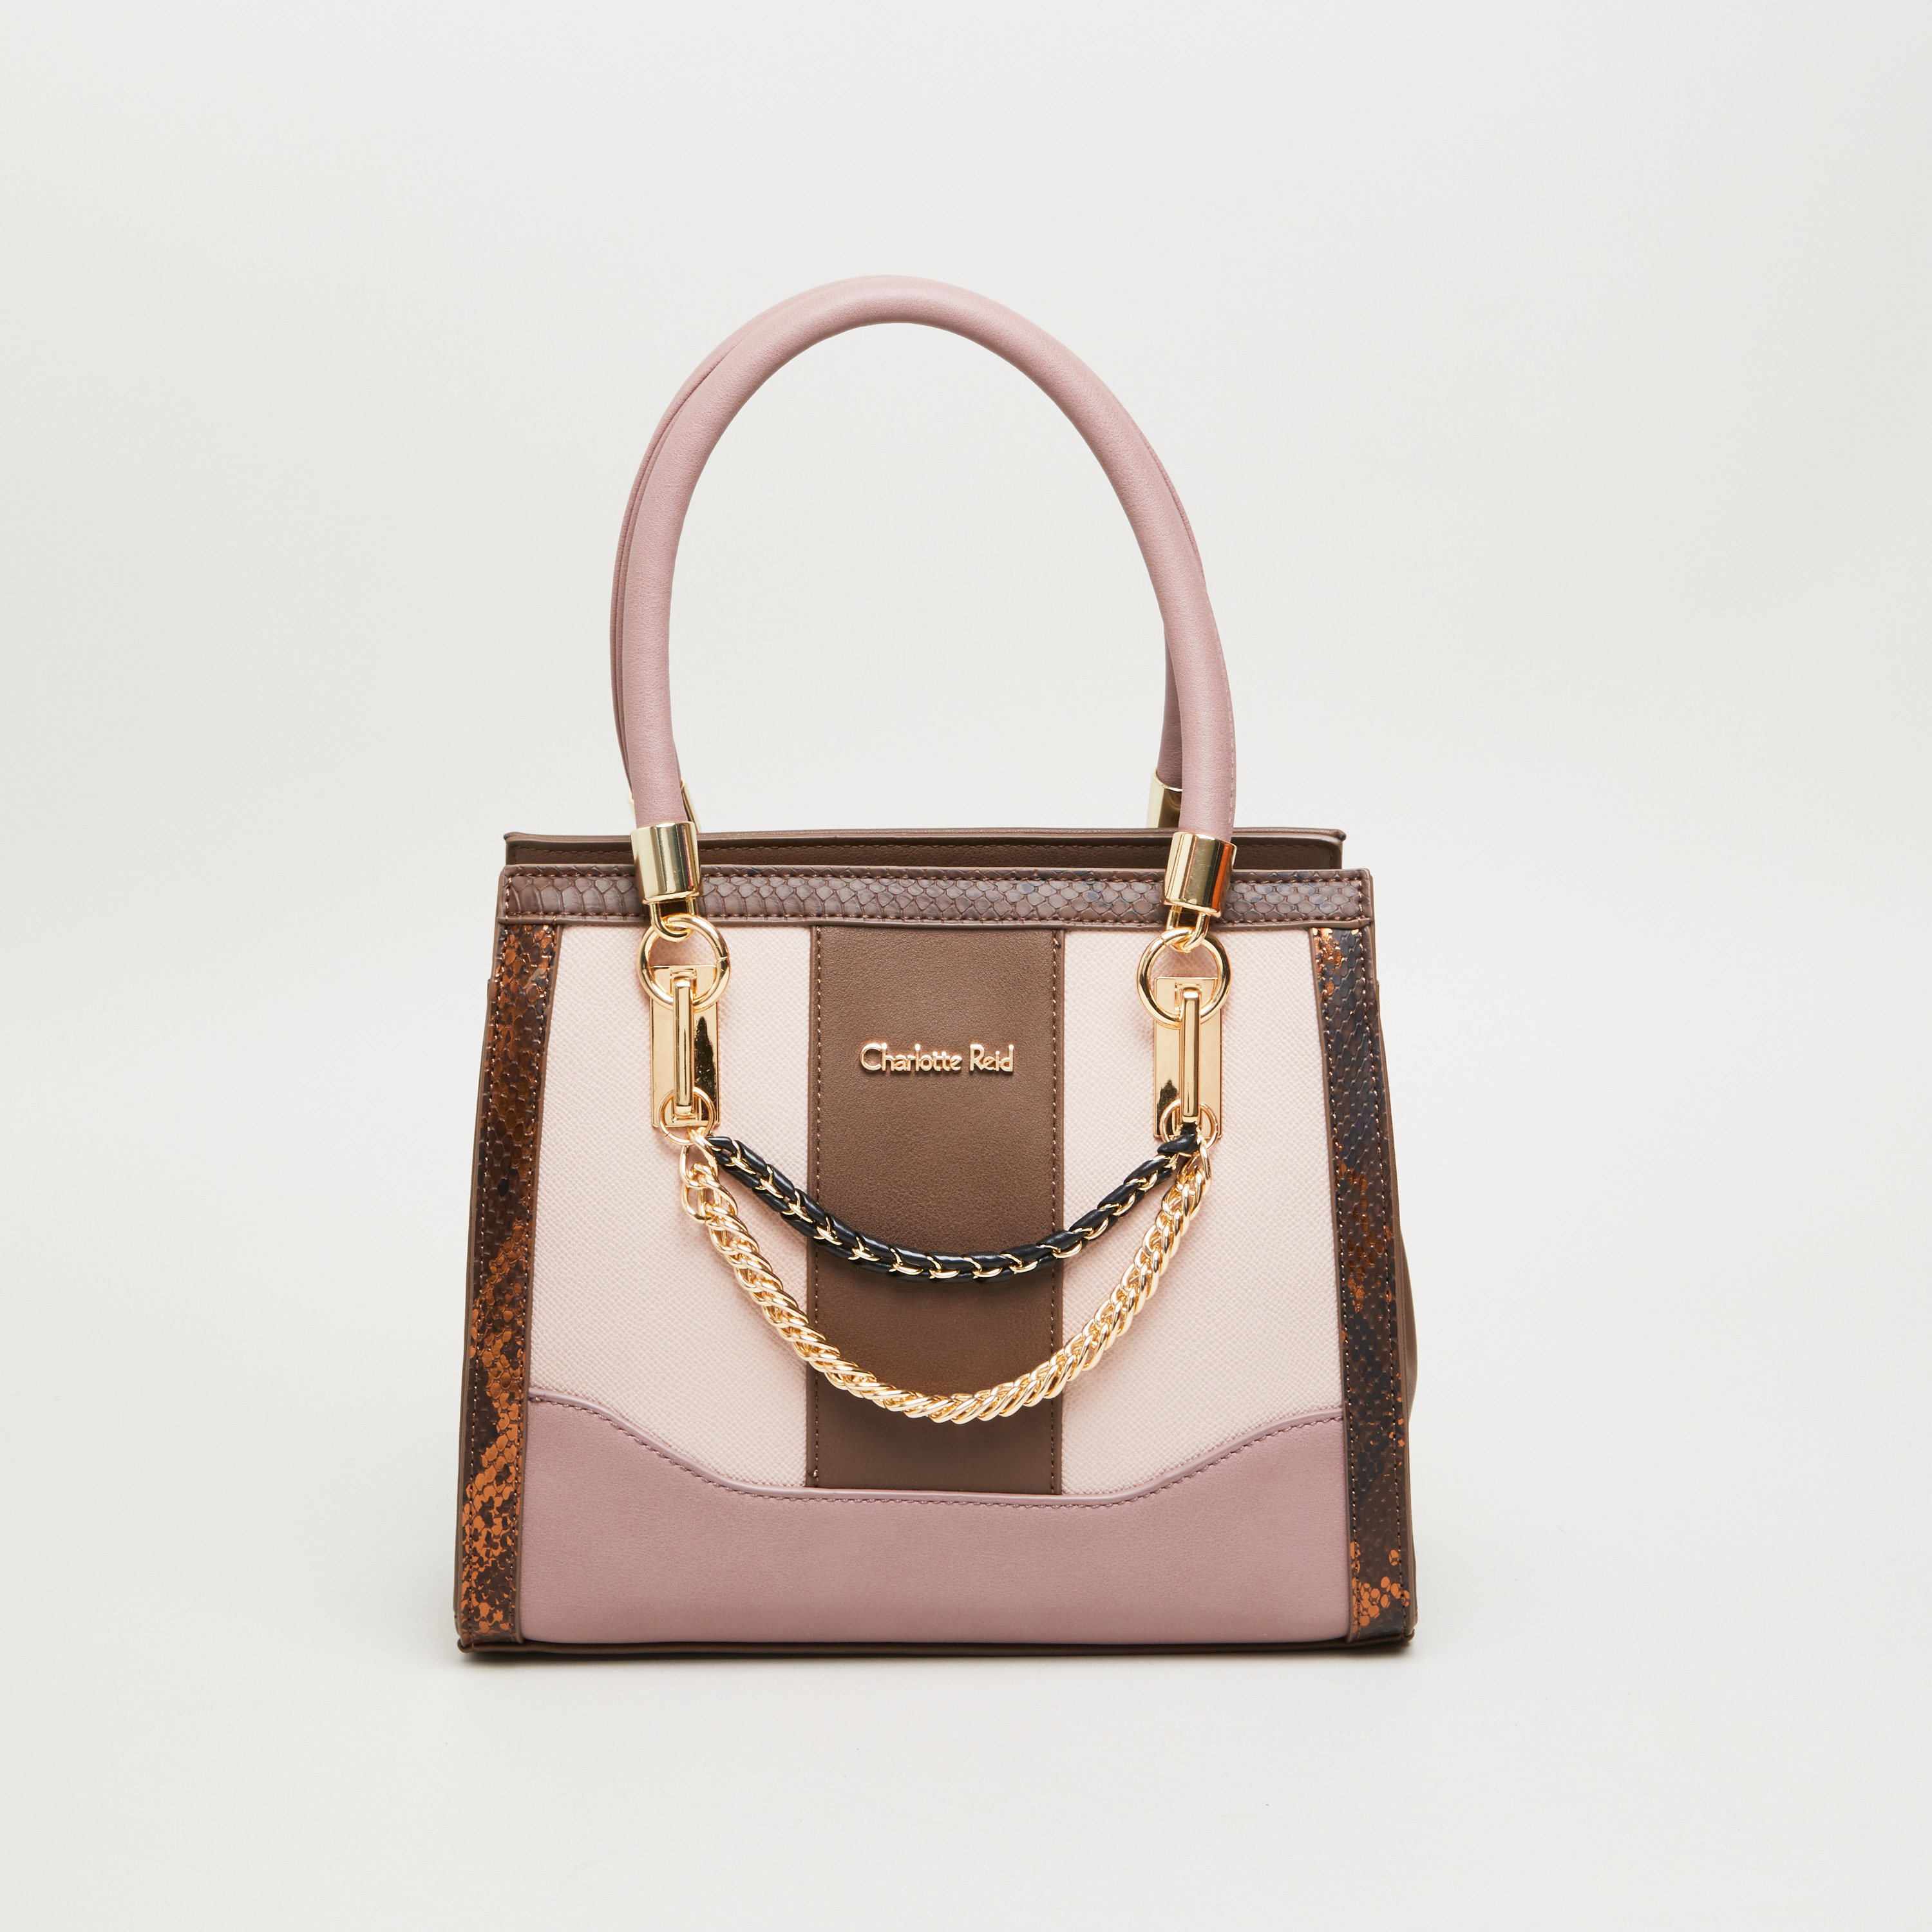 Buy Women's Charlotte Reid Duffle Bag Online | Centrepoint UAE